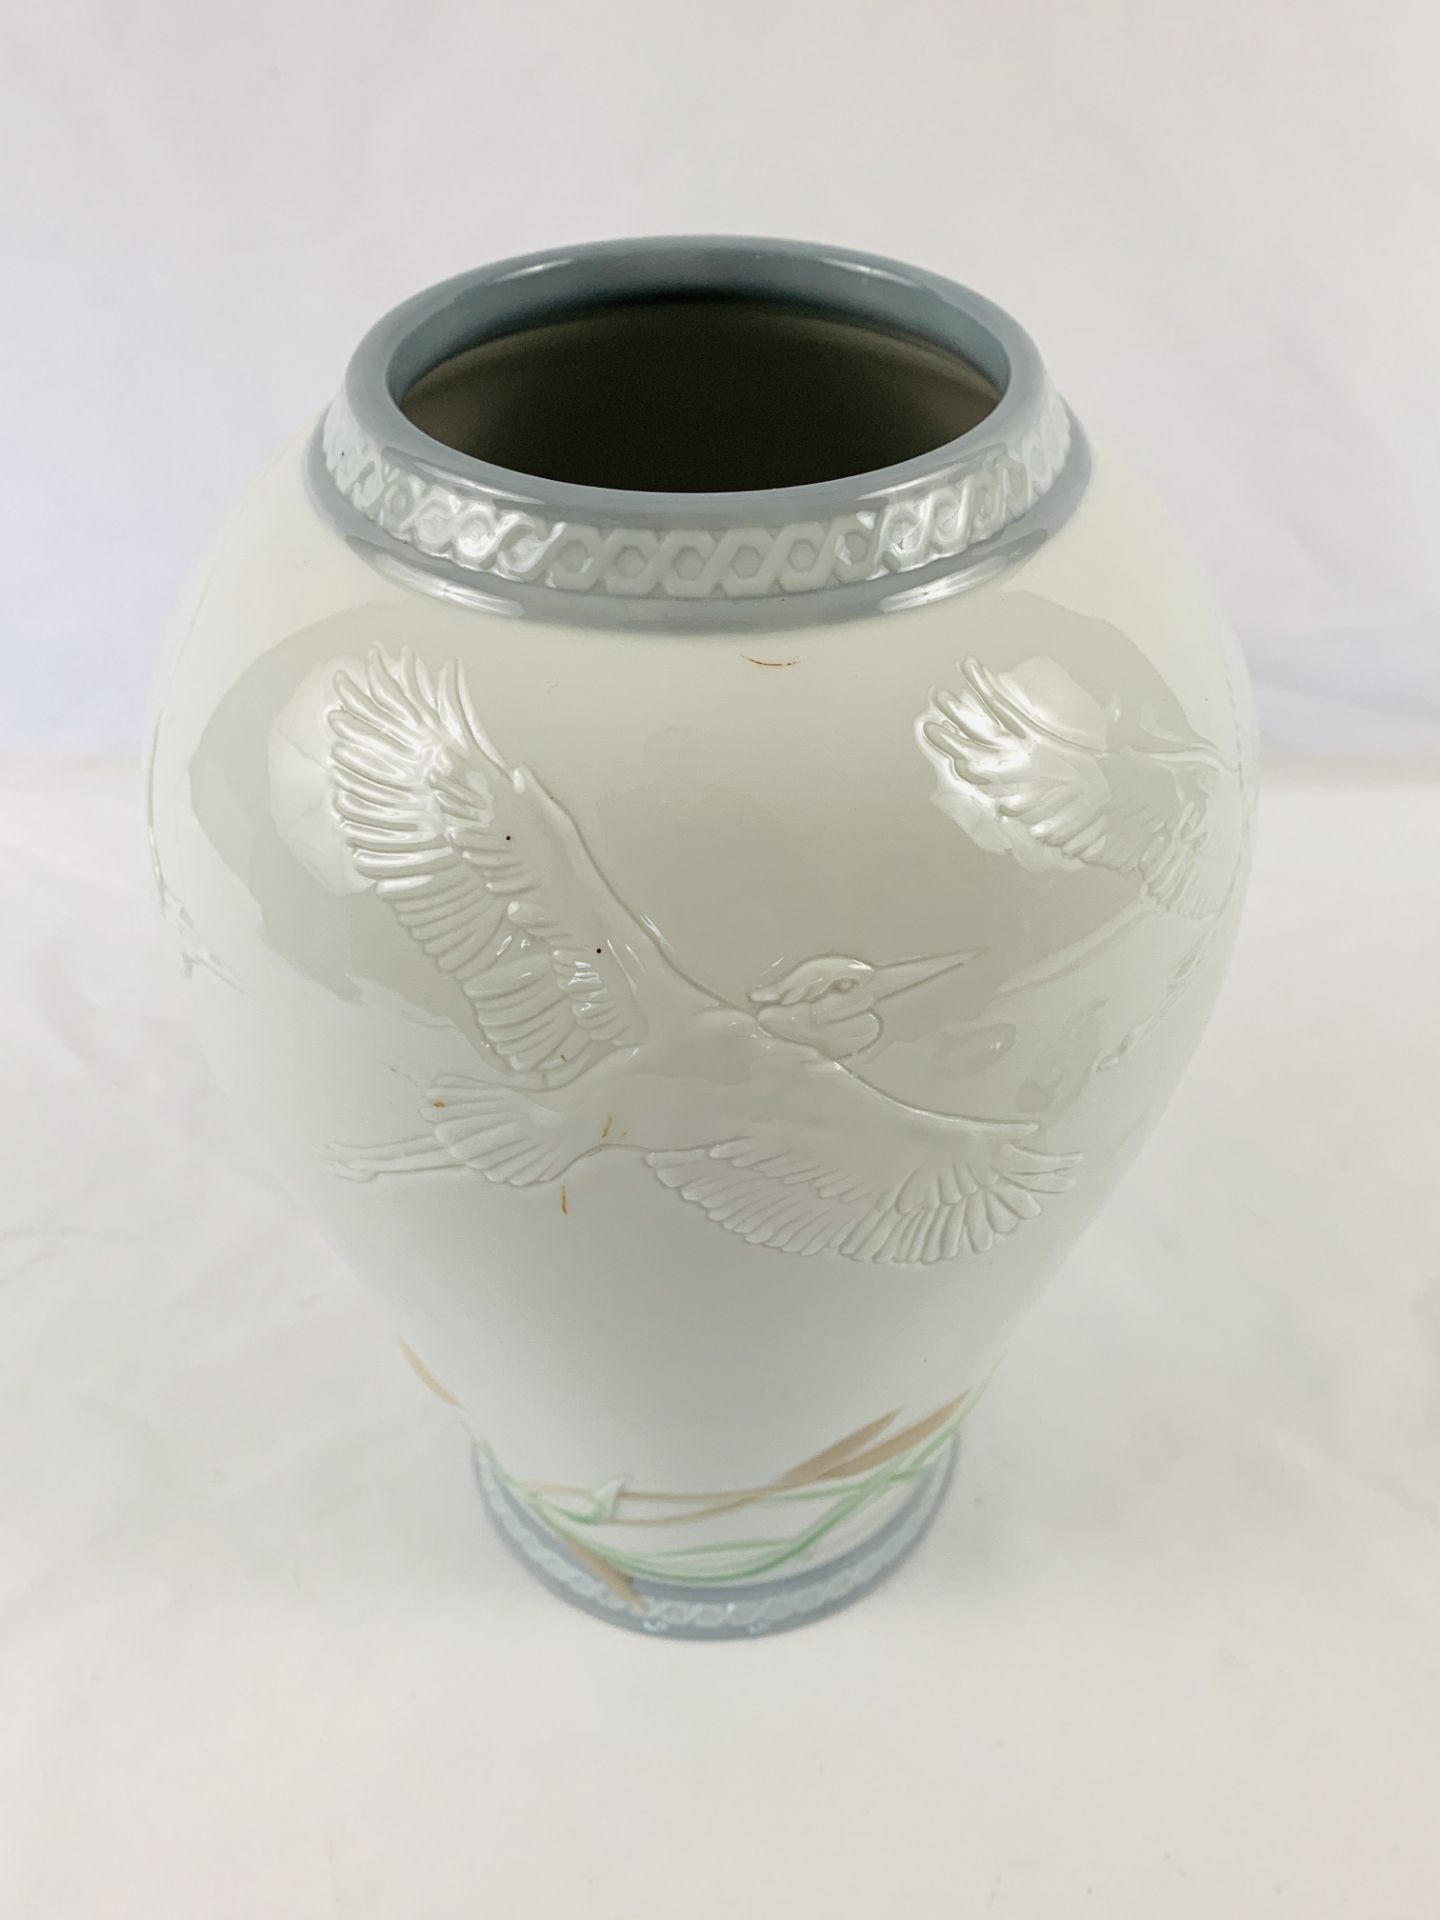 Lladro 'Herons Realm' lidded vase - Image 4 of 5